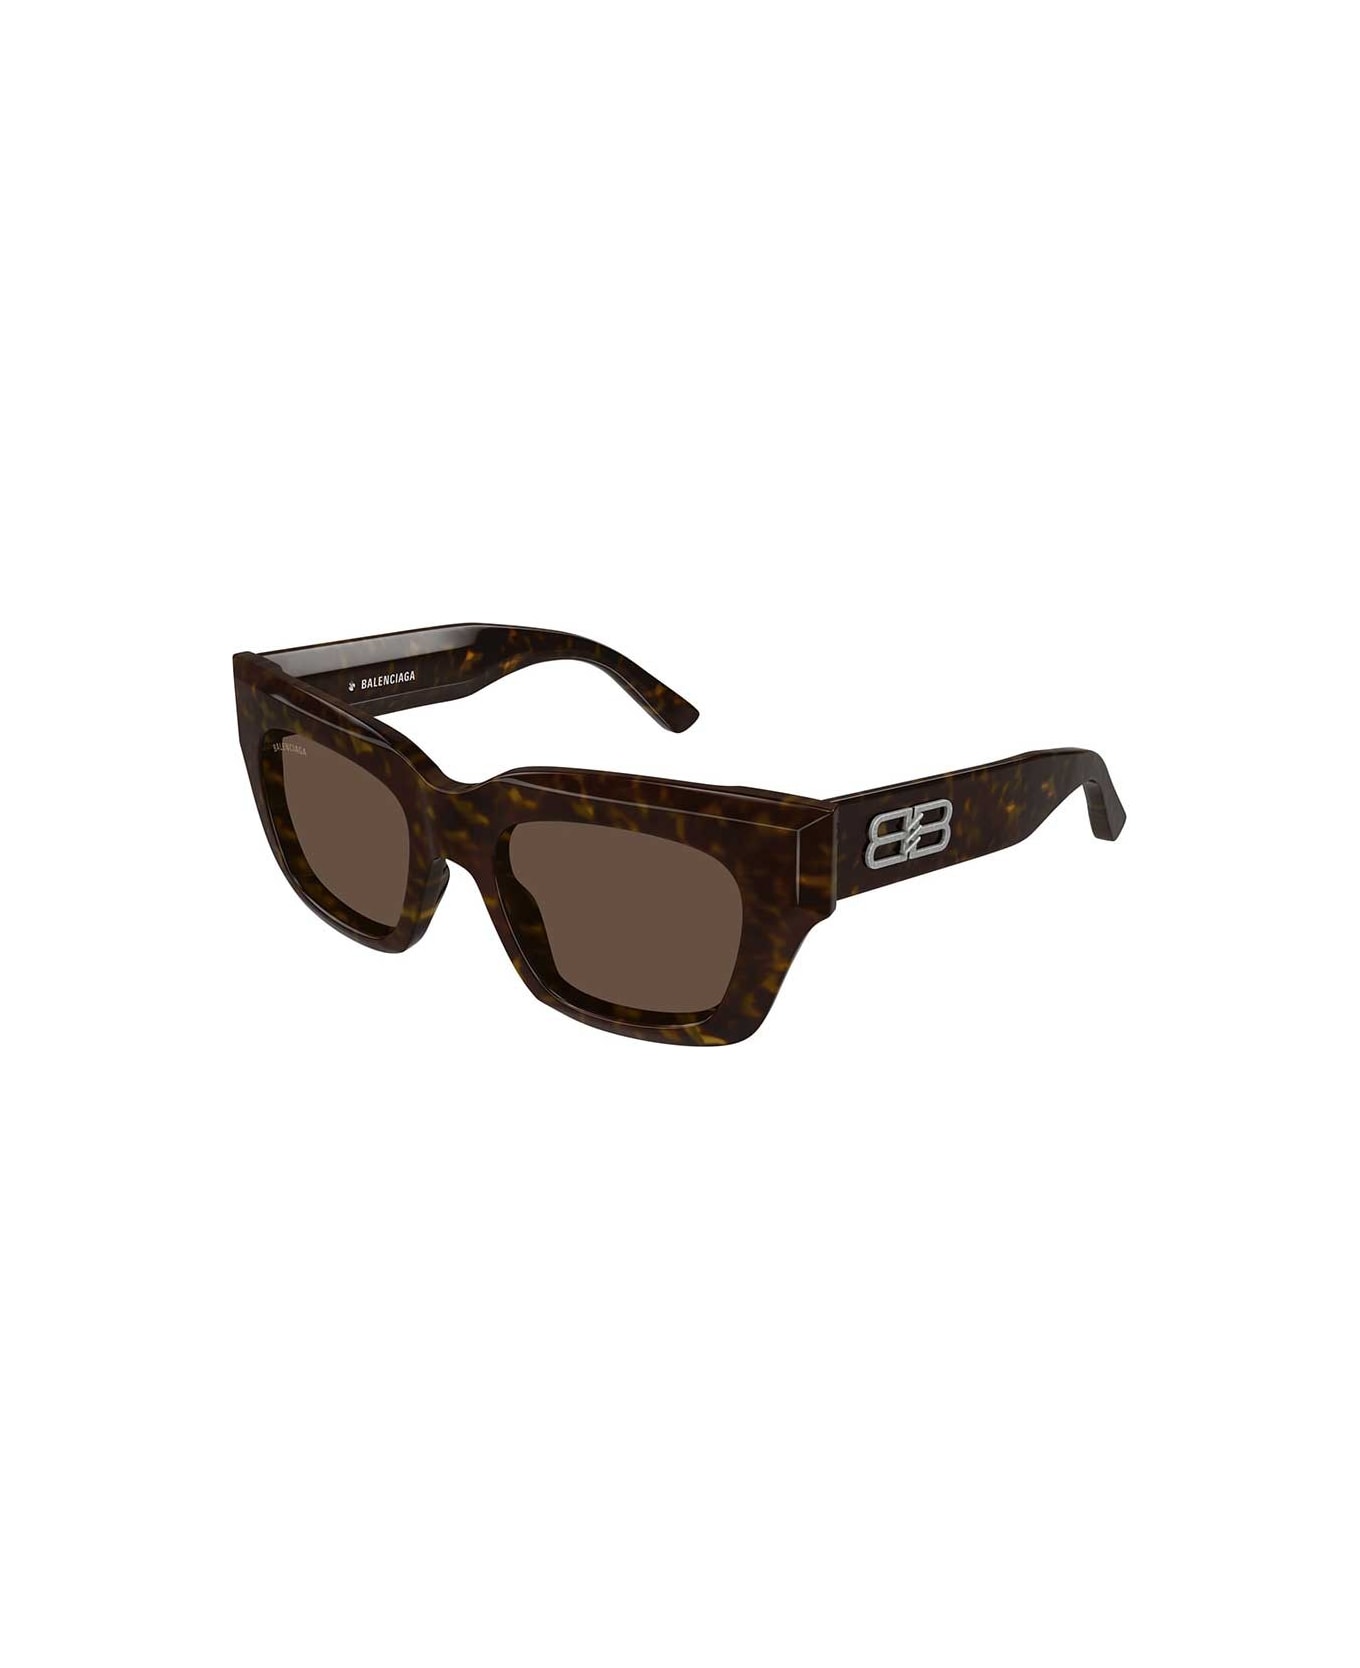 Balenciaga Eyewear Bb0234s Sunglasses - Havana